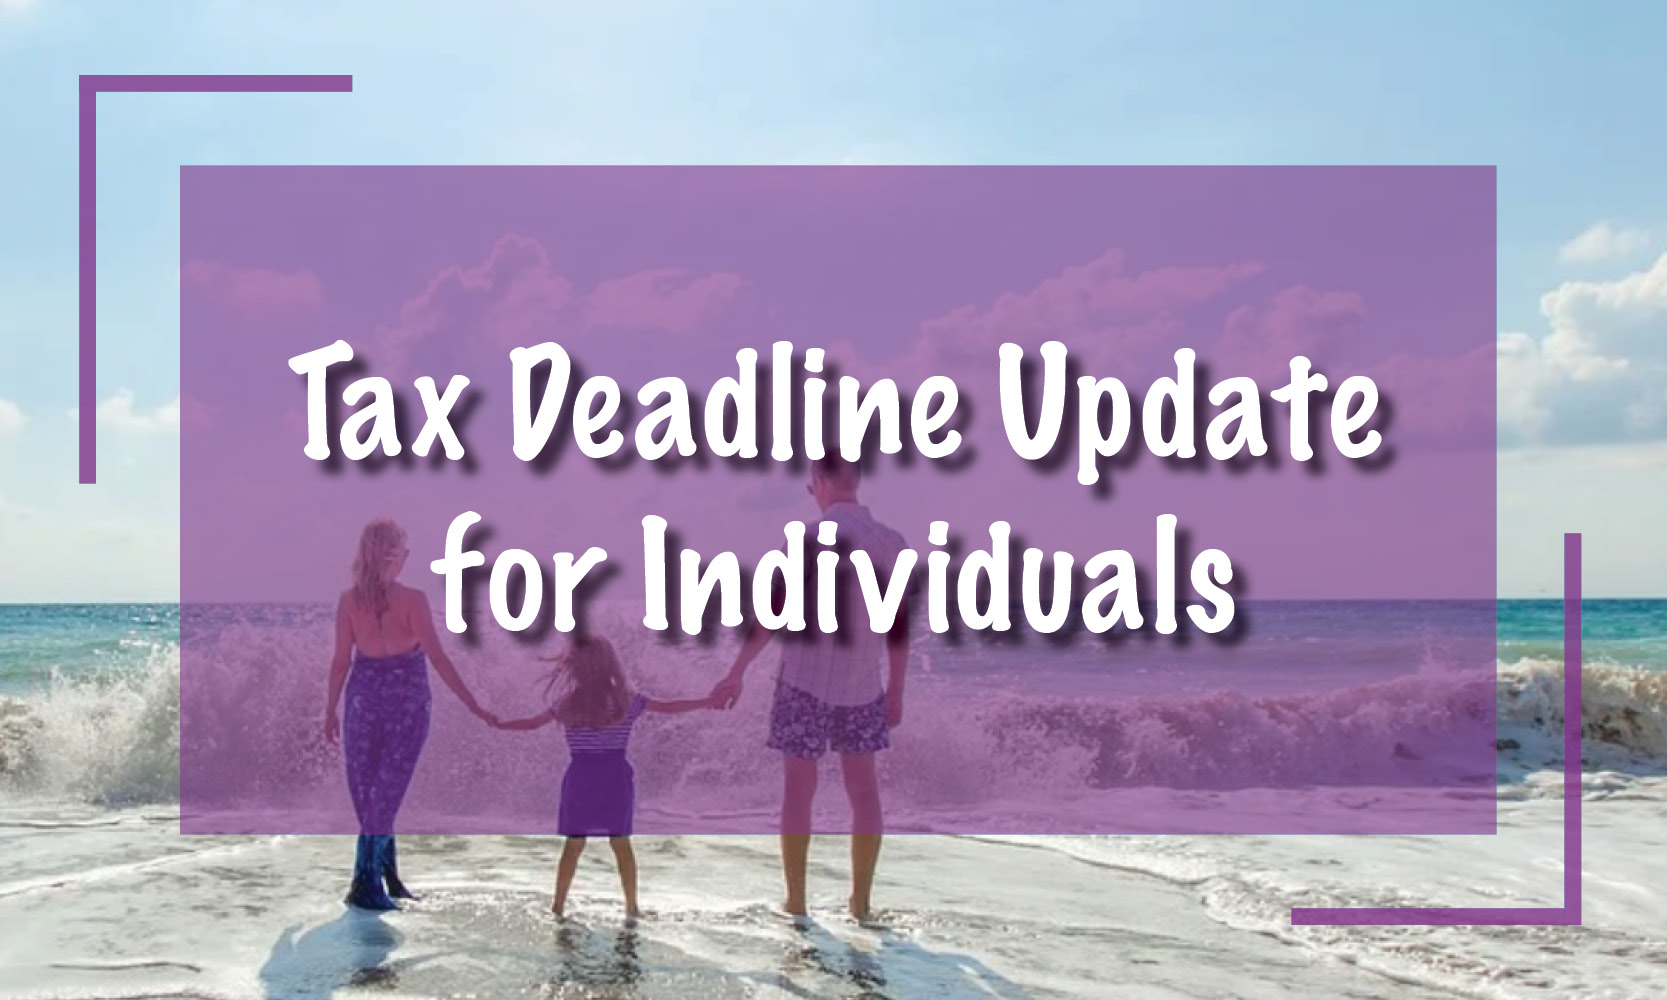 Tax Deadline Update for Individuals